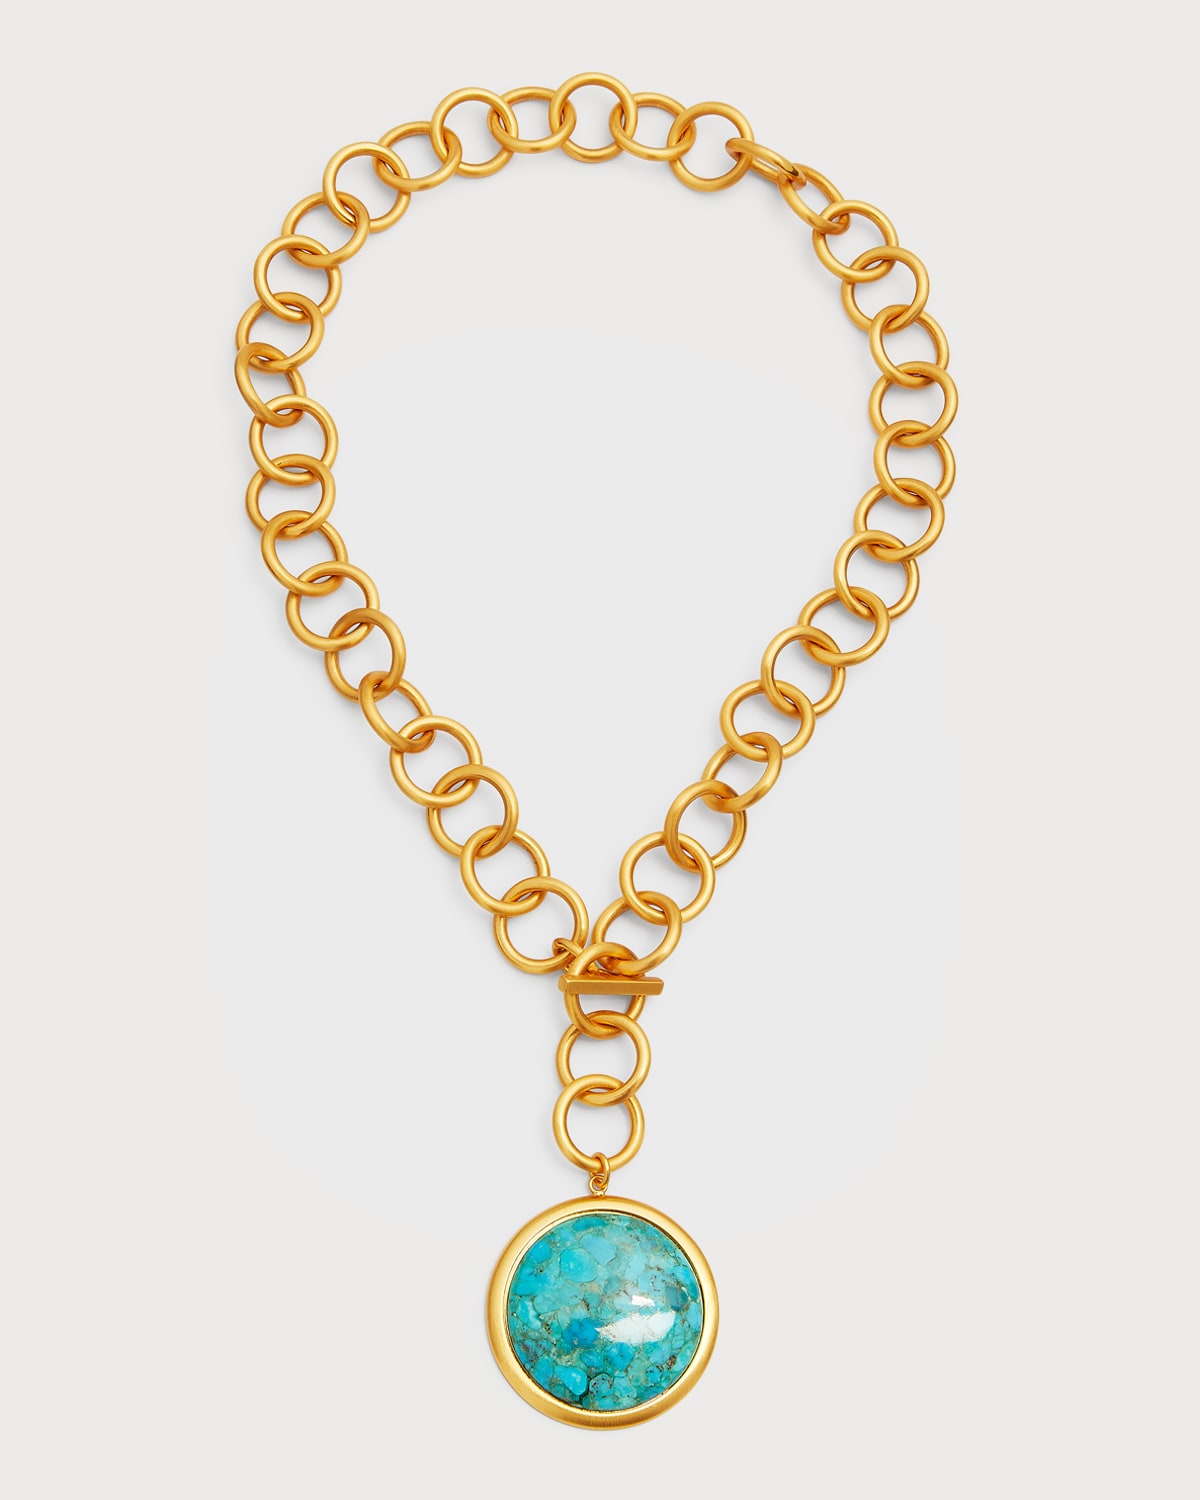 Brushed Chain with Bezel-Set Turquoise Cabochon